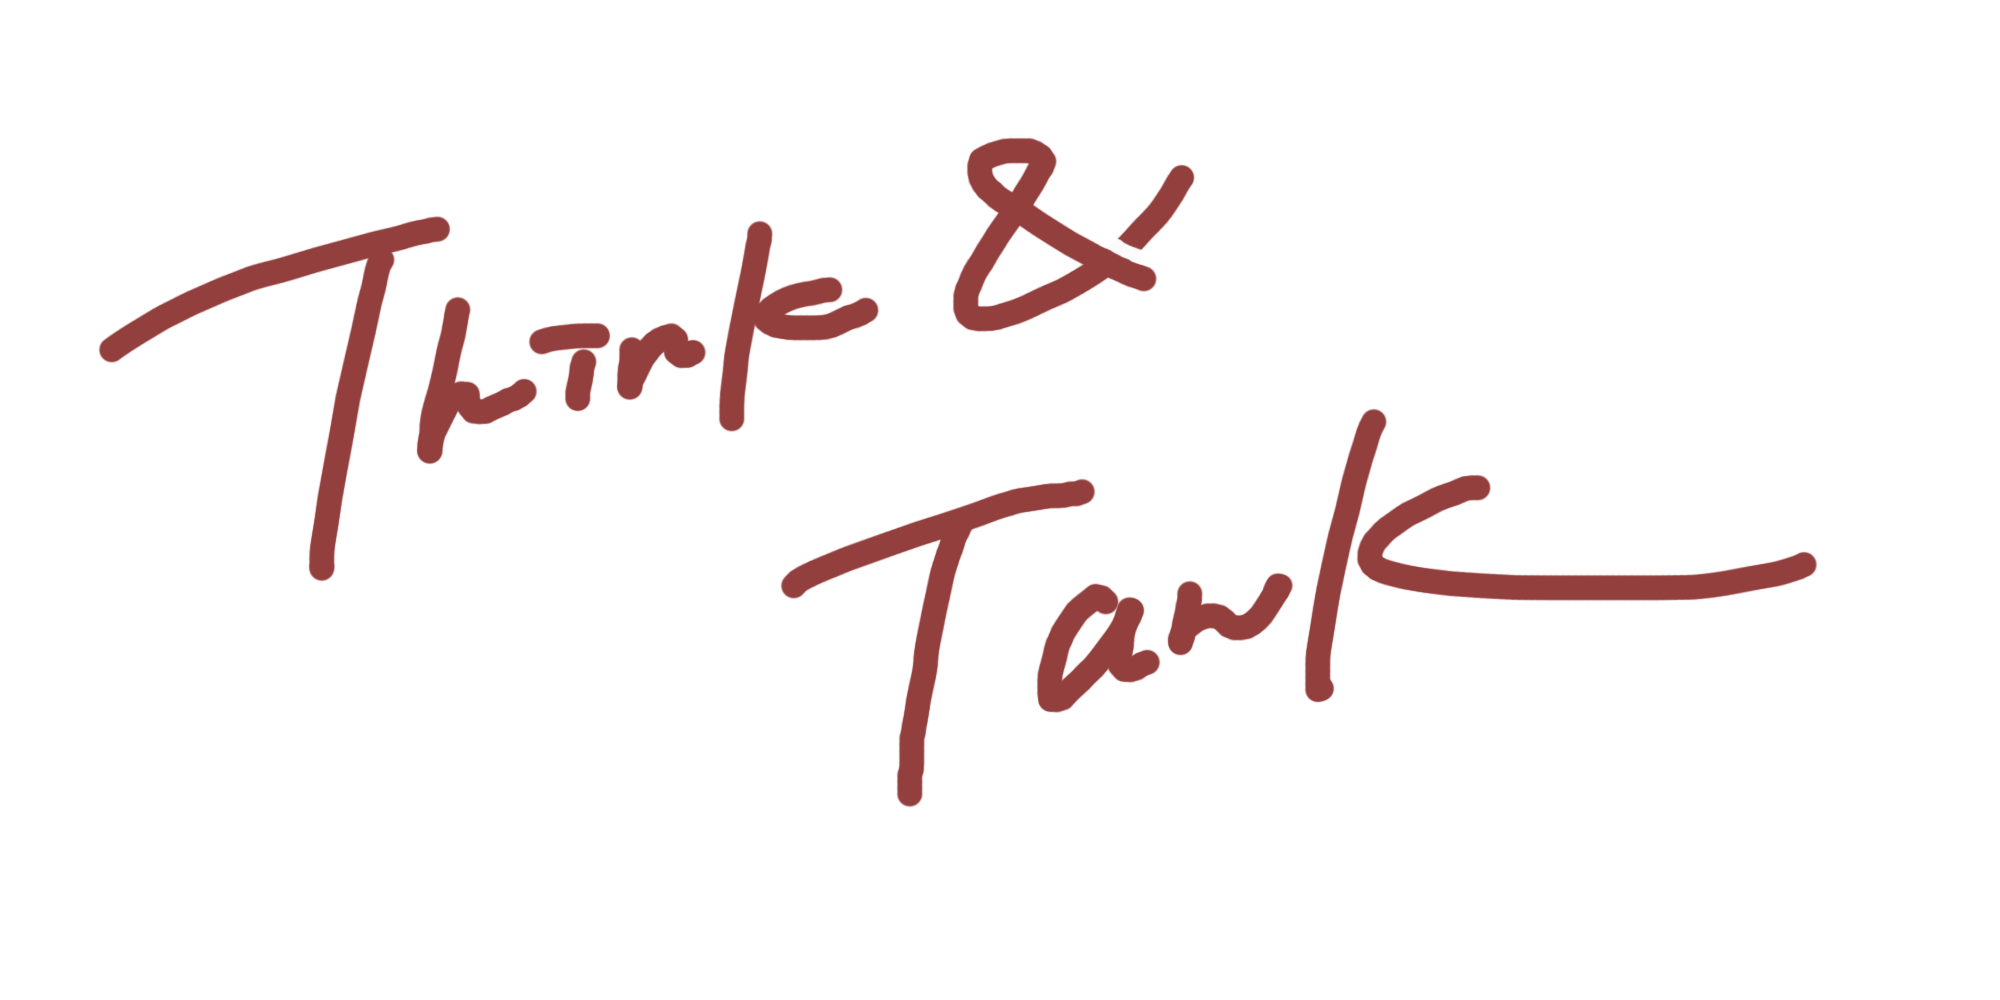 Think & Do Tank